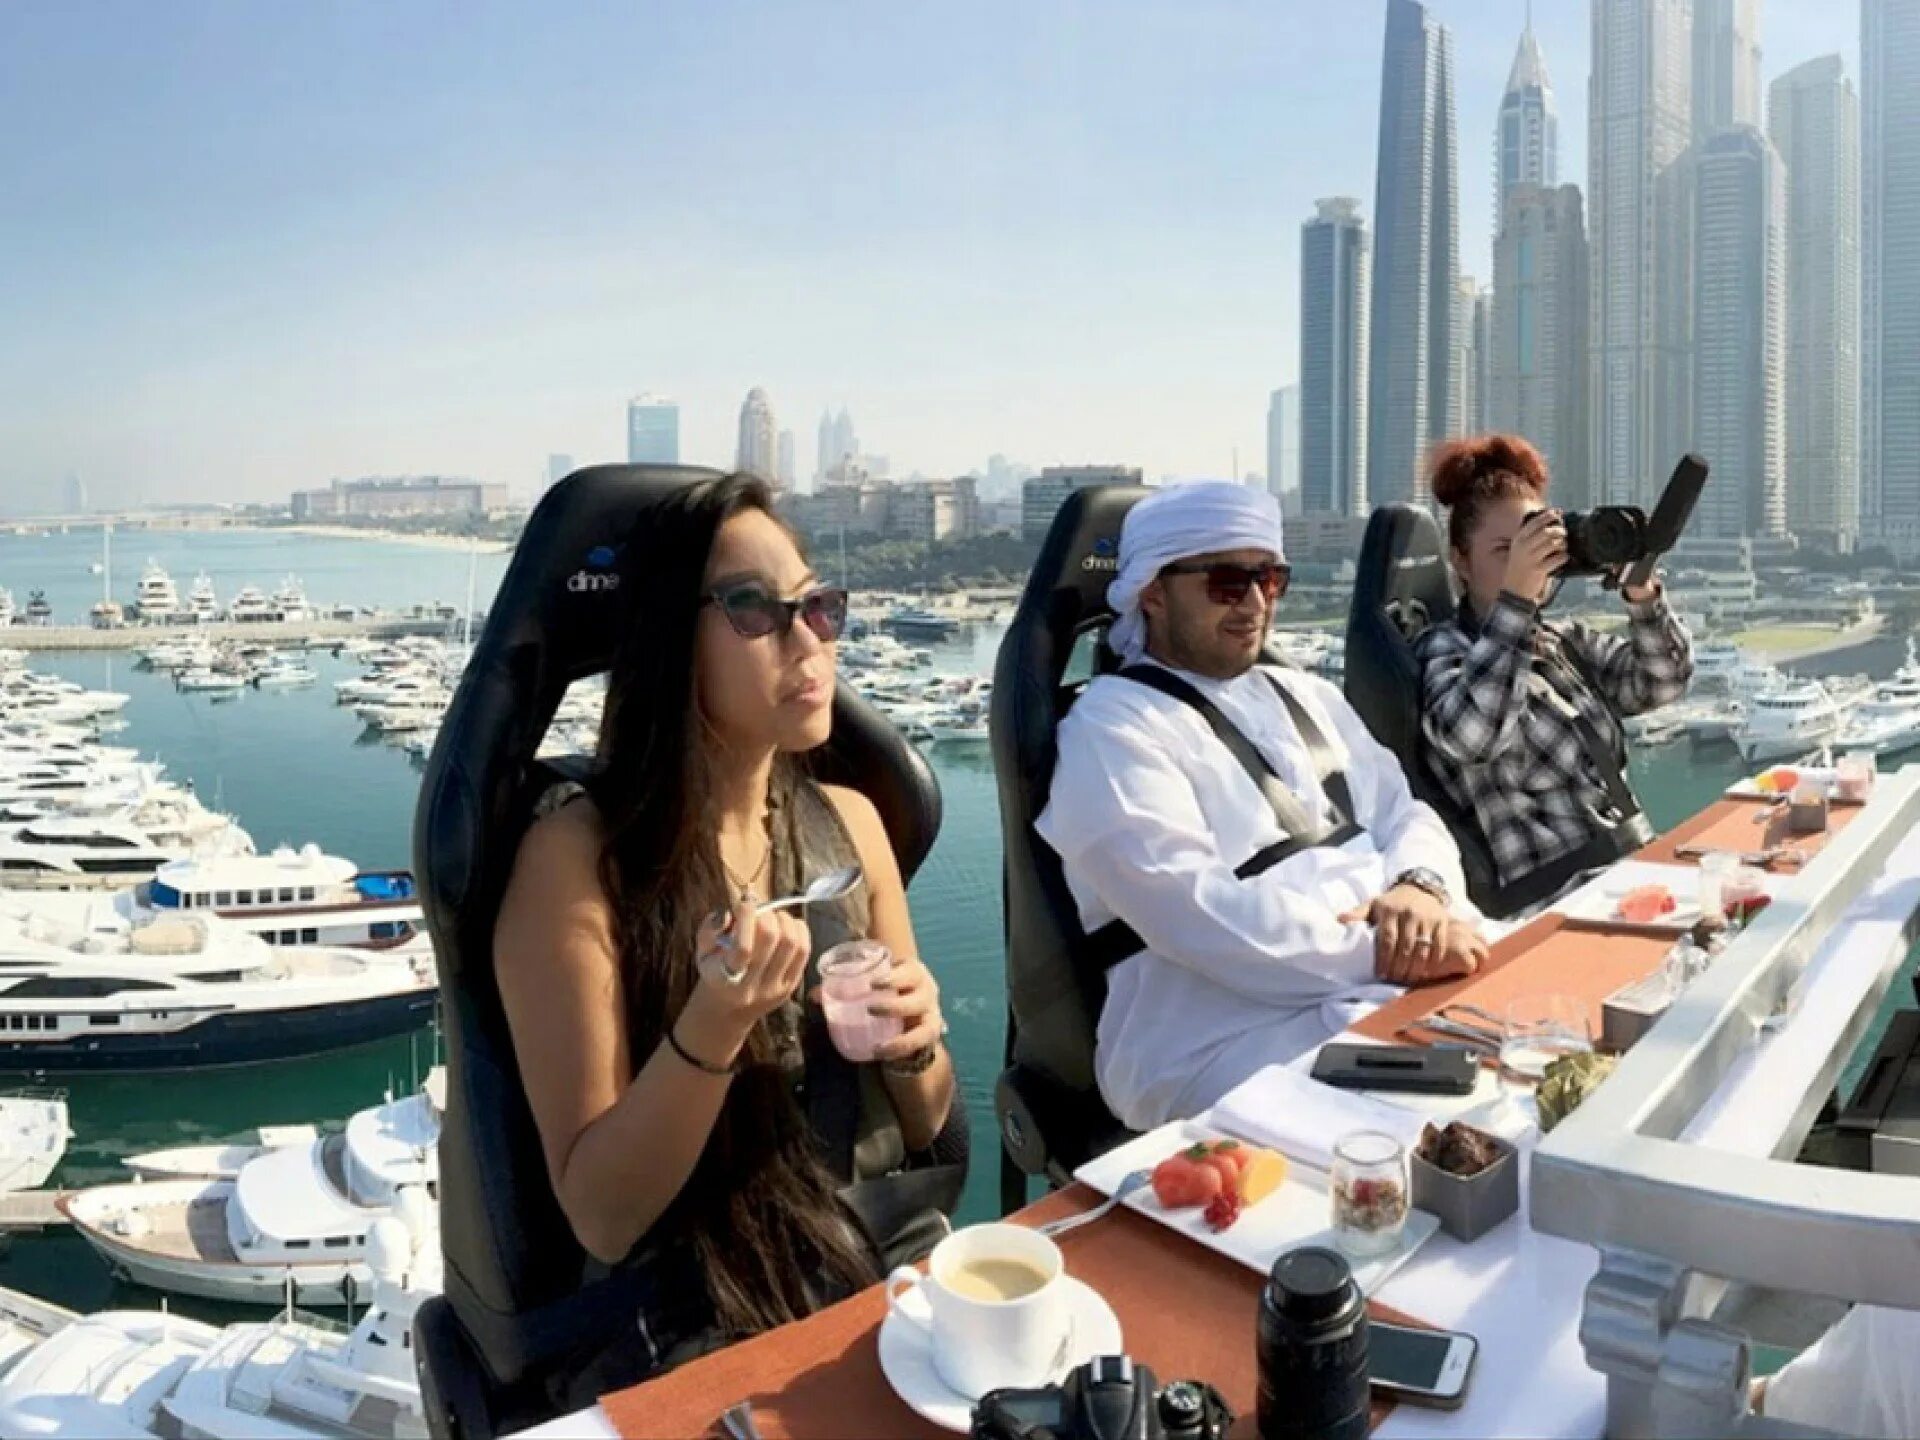 Dinner in the Sky Дубай. Dinner in the Sky ресторан Dubai. Дубай Скай Дубай. Ресторан Clap Дубай.